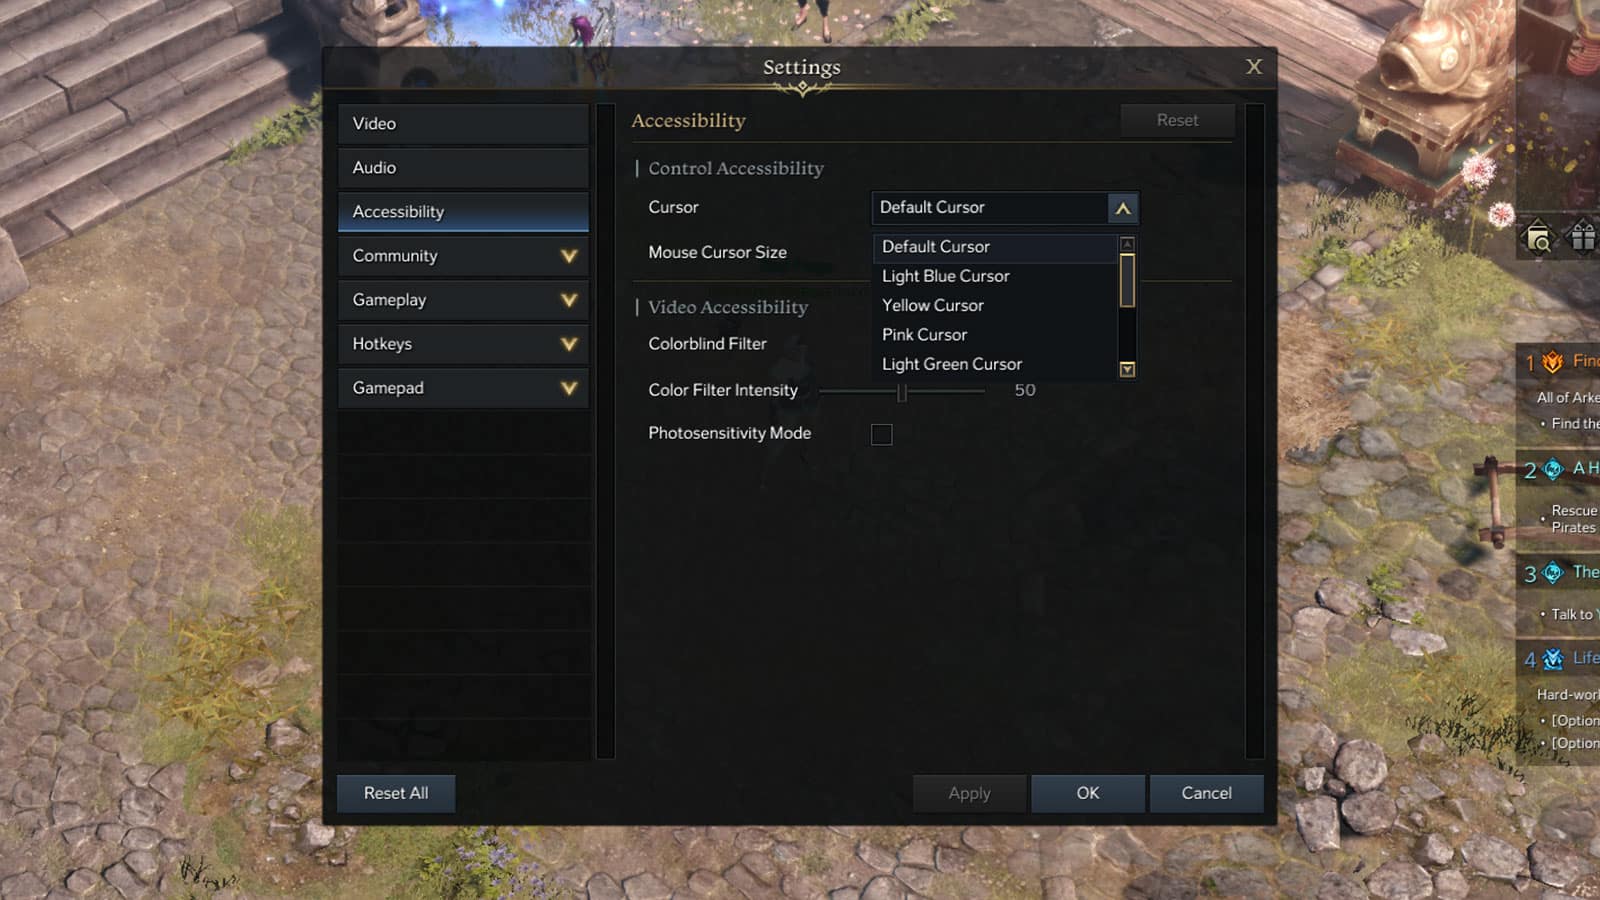 Accessbility settings menu in Lost Ark